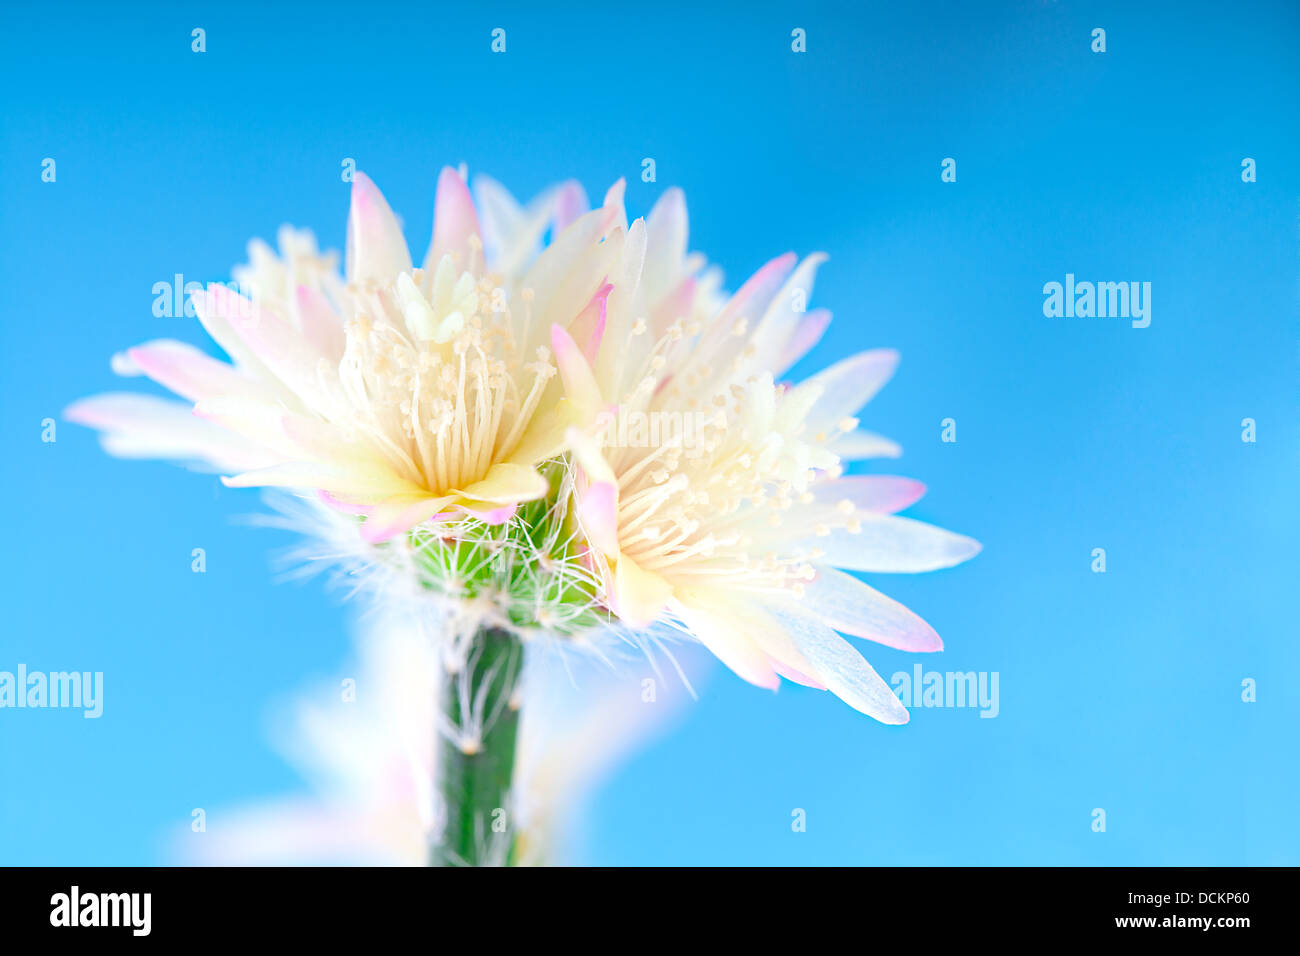 flower of rhipsalis pilocarpa - cactus, on blue background Stock Photo